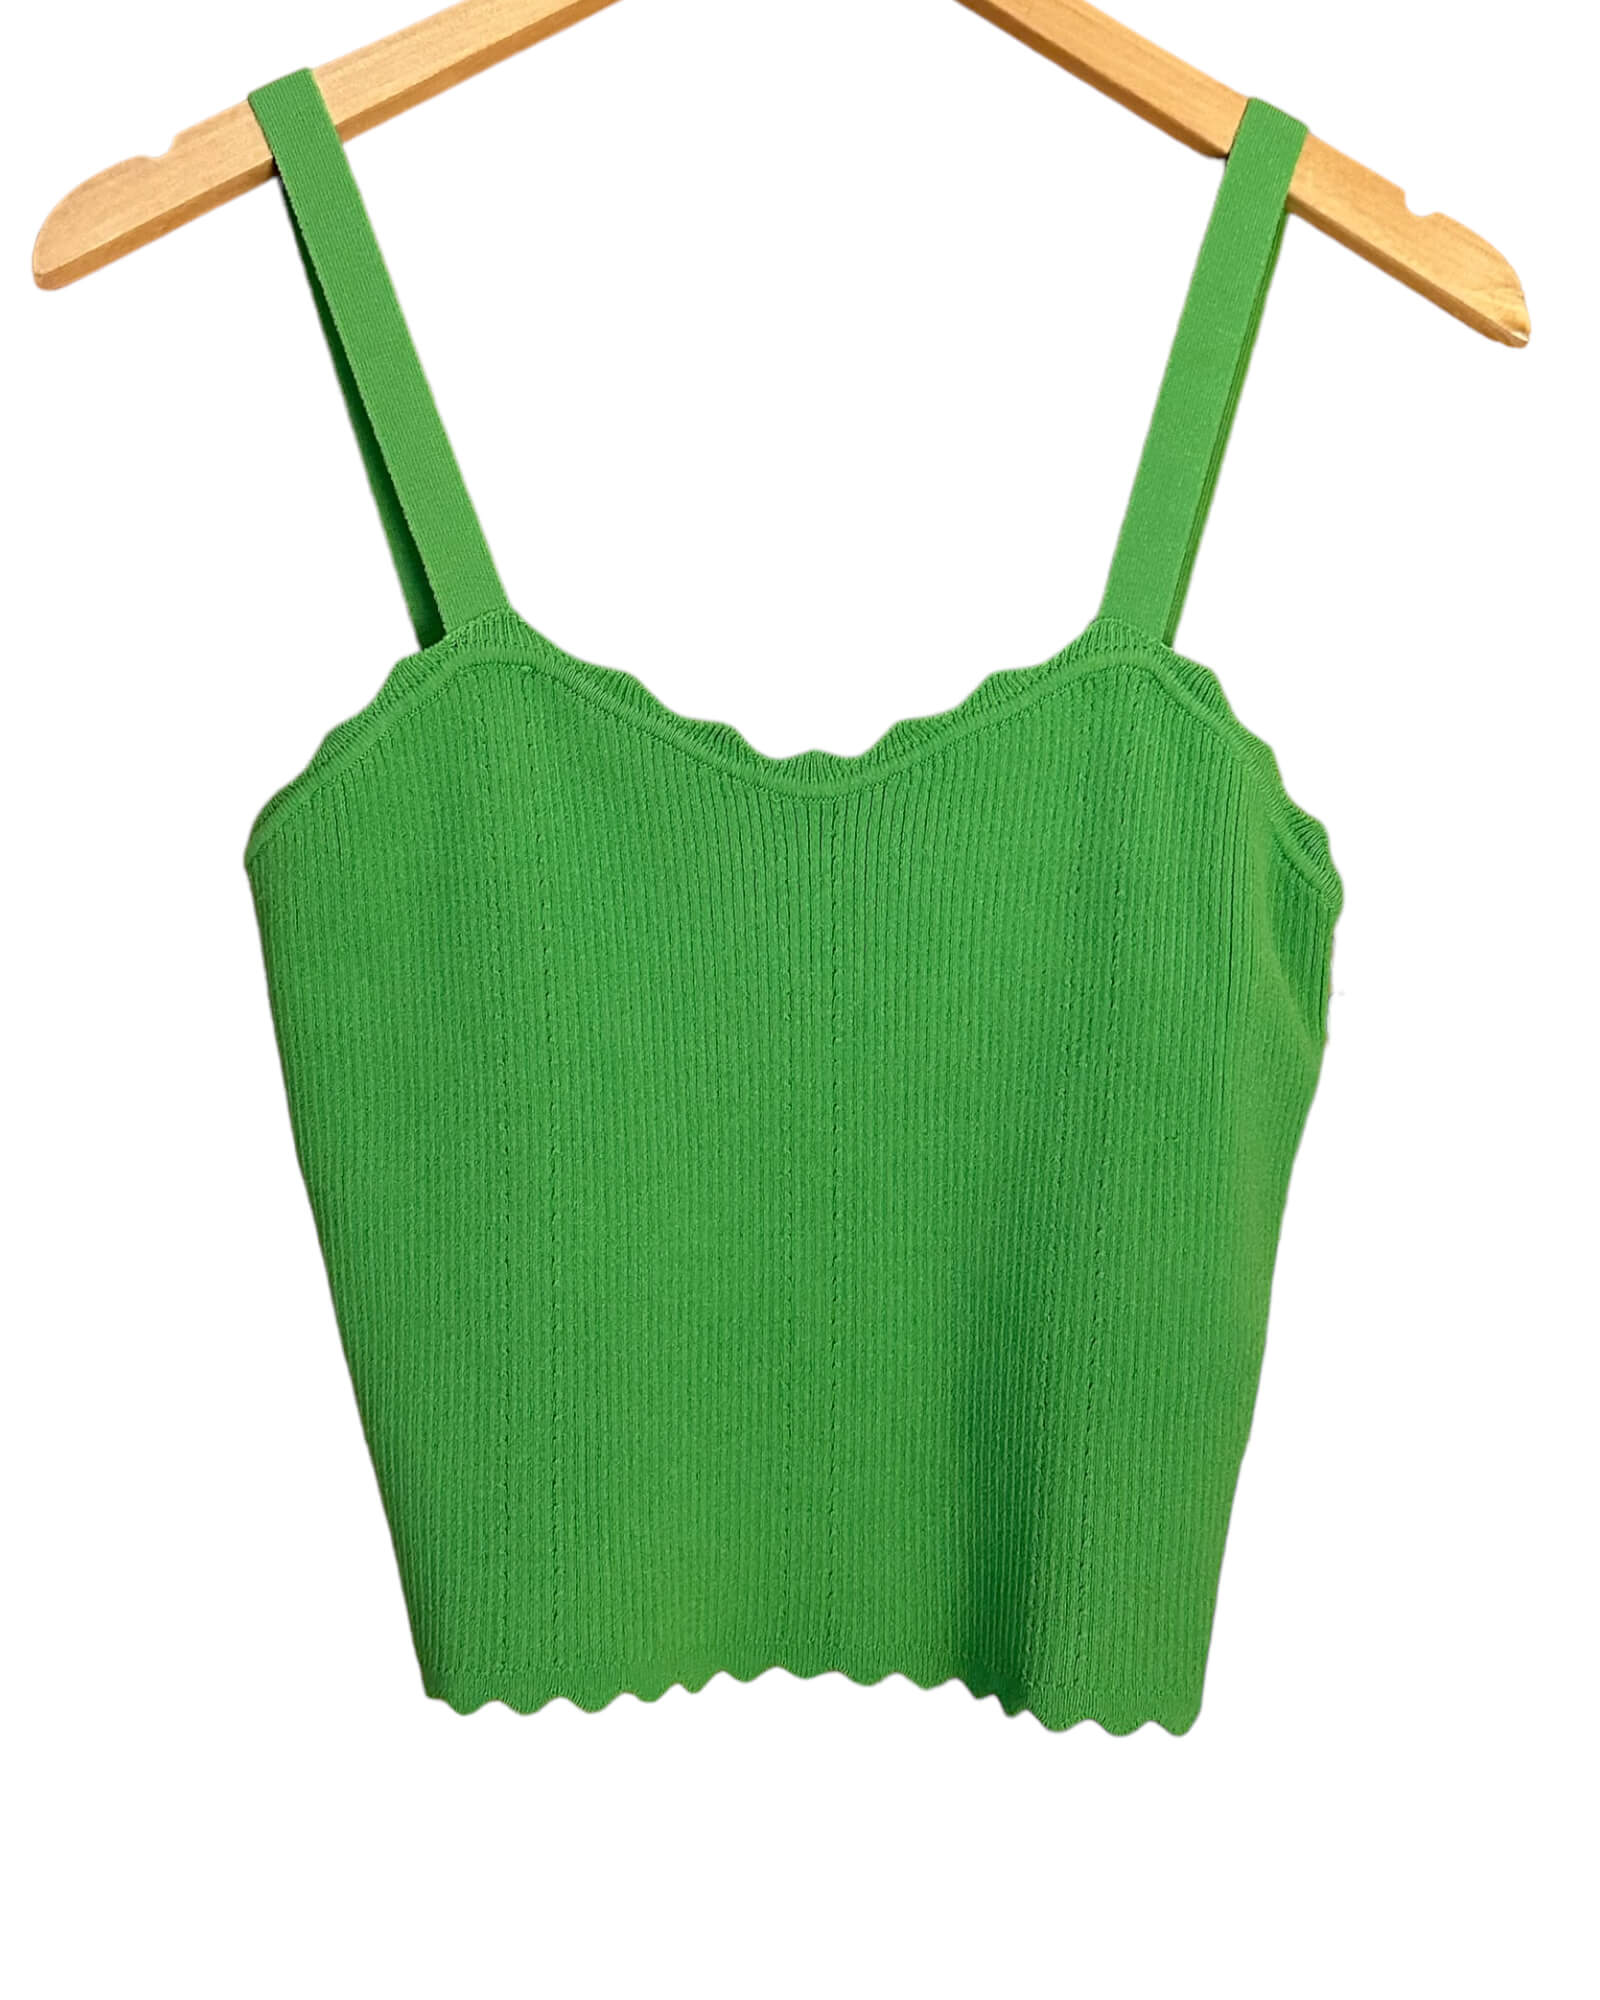 Bright Spring ORIGINALITY Lime Green scallop hem sweater knit crop top tank cami